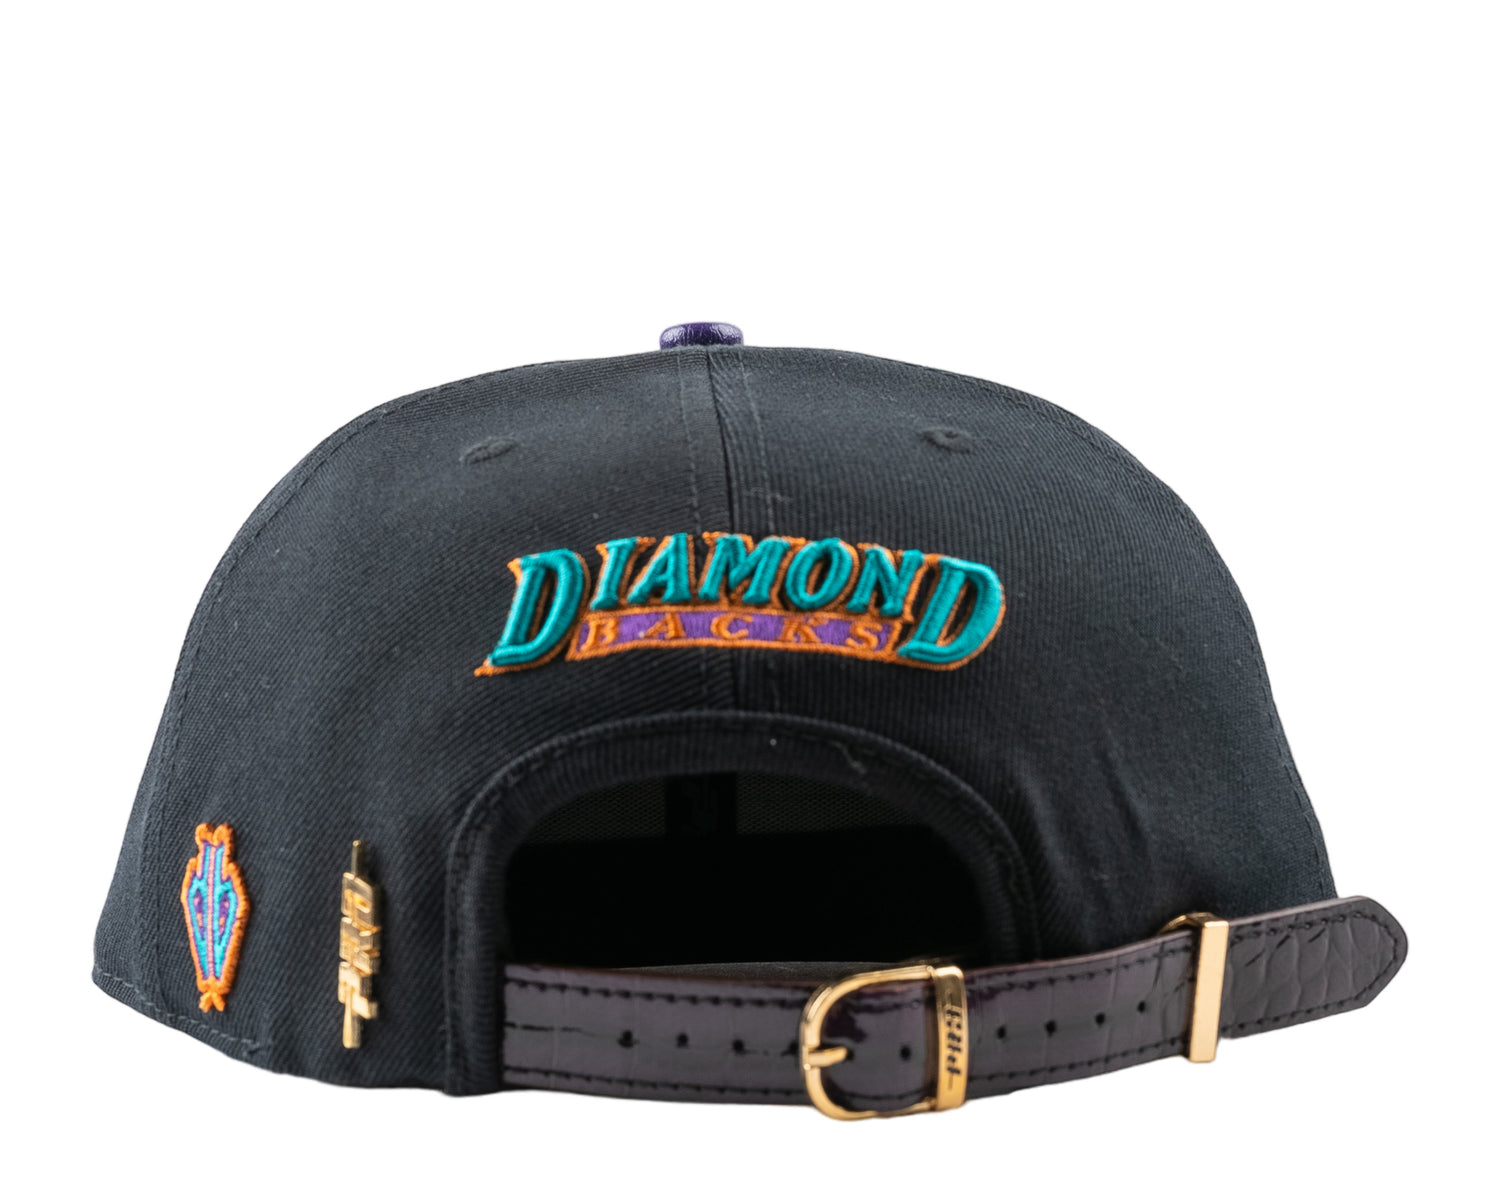 Pro Standard MLB Arizona Diamondbacks Retro Team Logo Strapback Hat